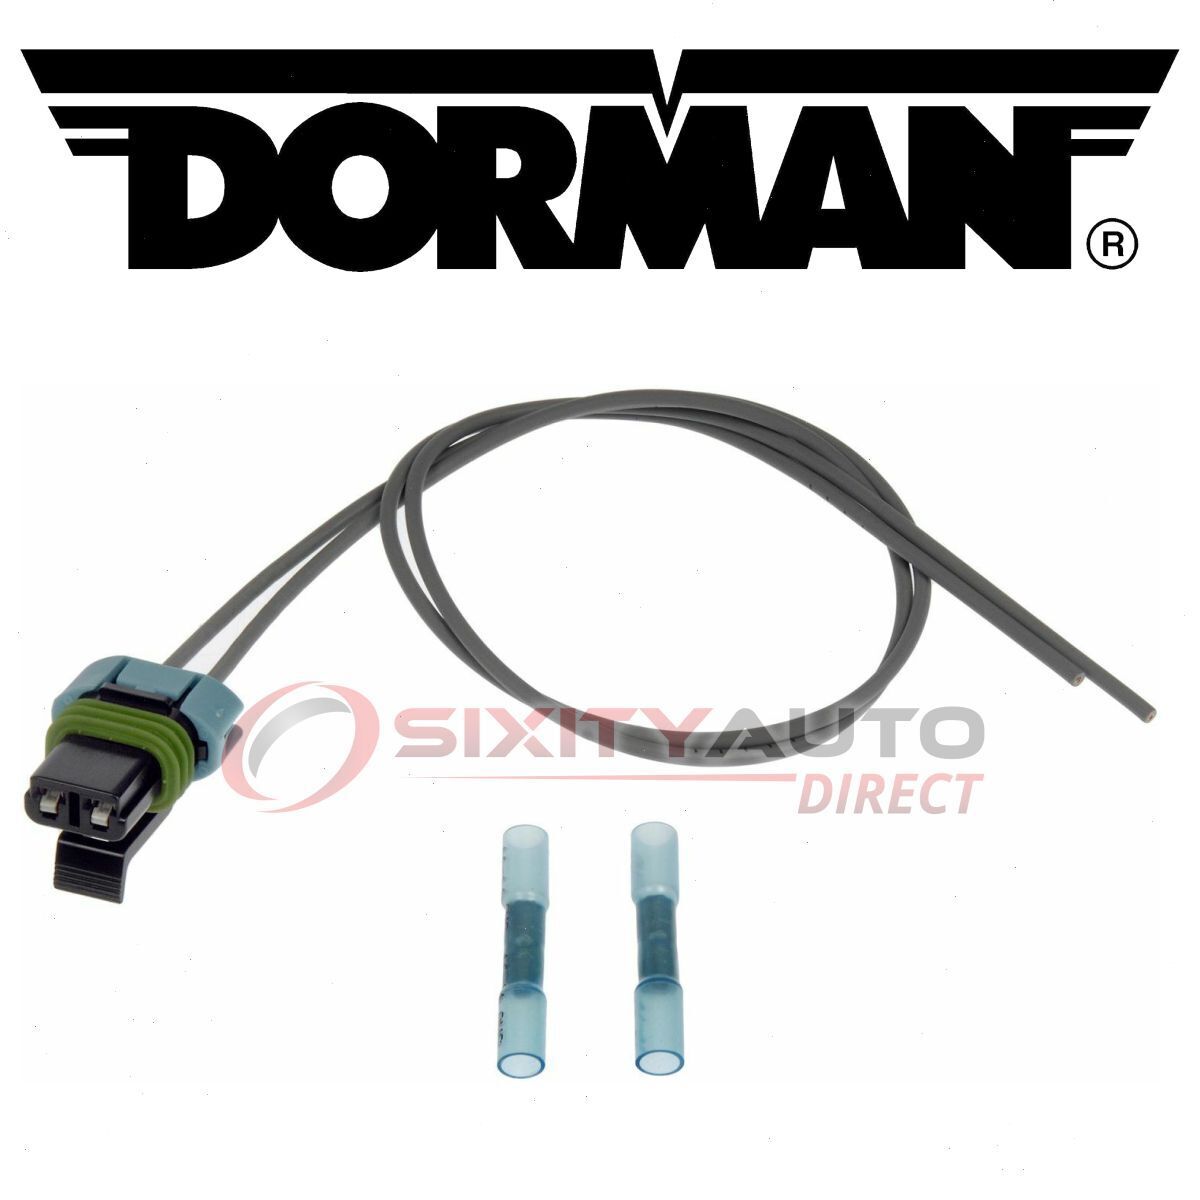 Dorman TECHoice Rear Right Door Lock Module Connector for 1978-1991 ko